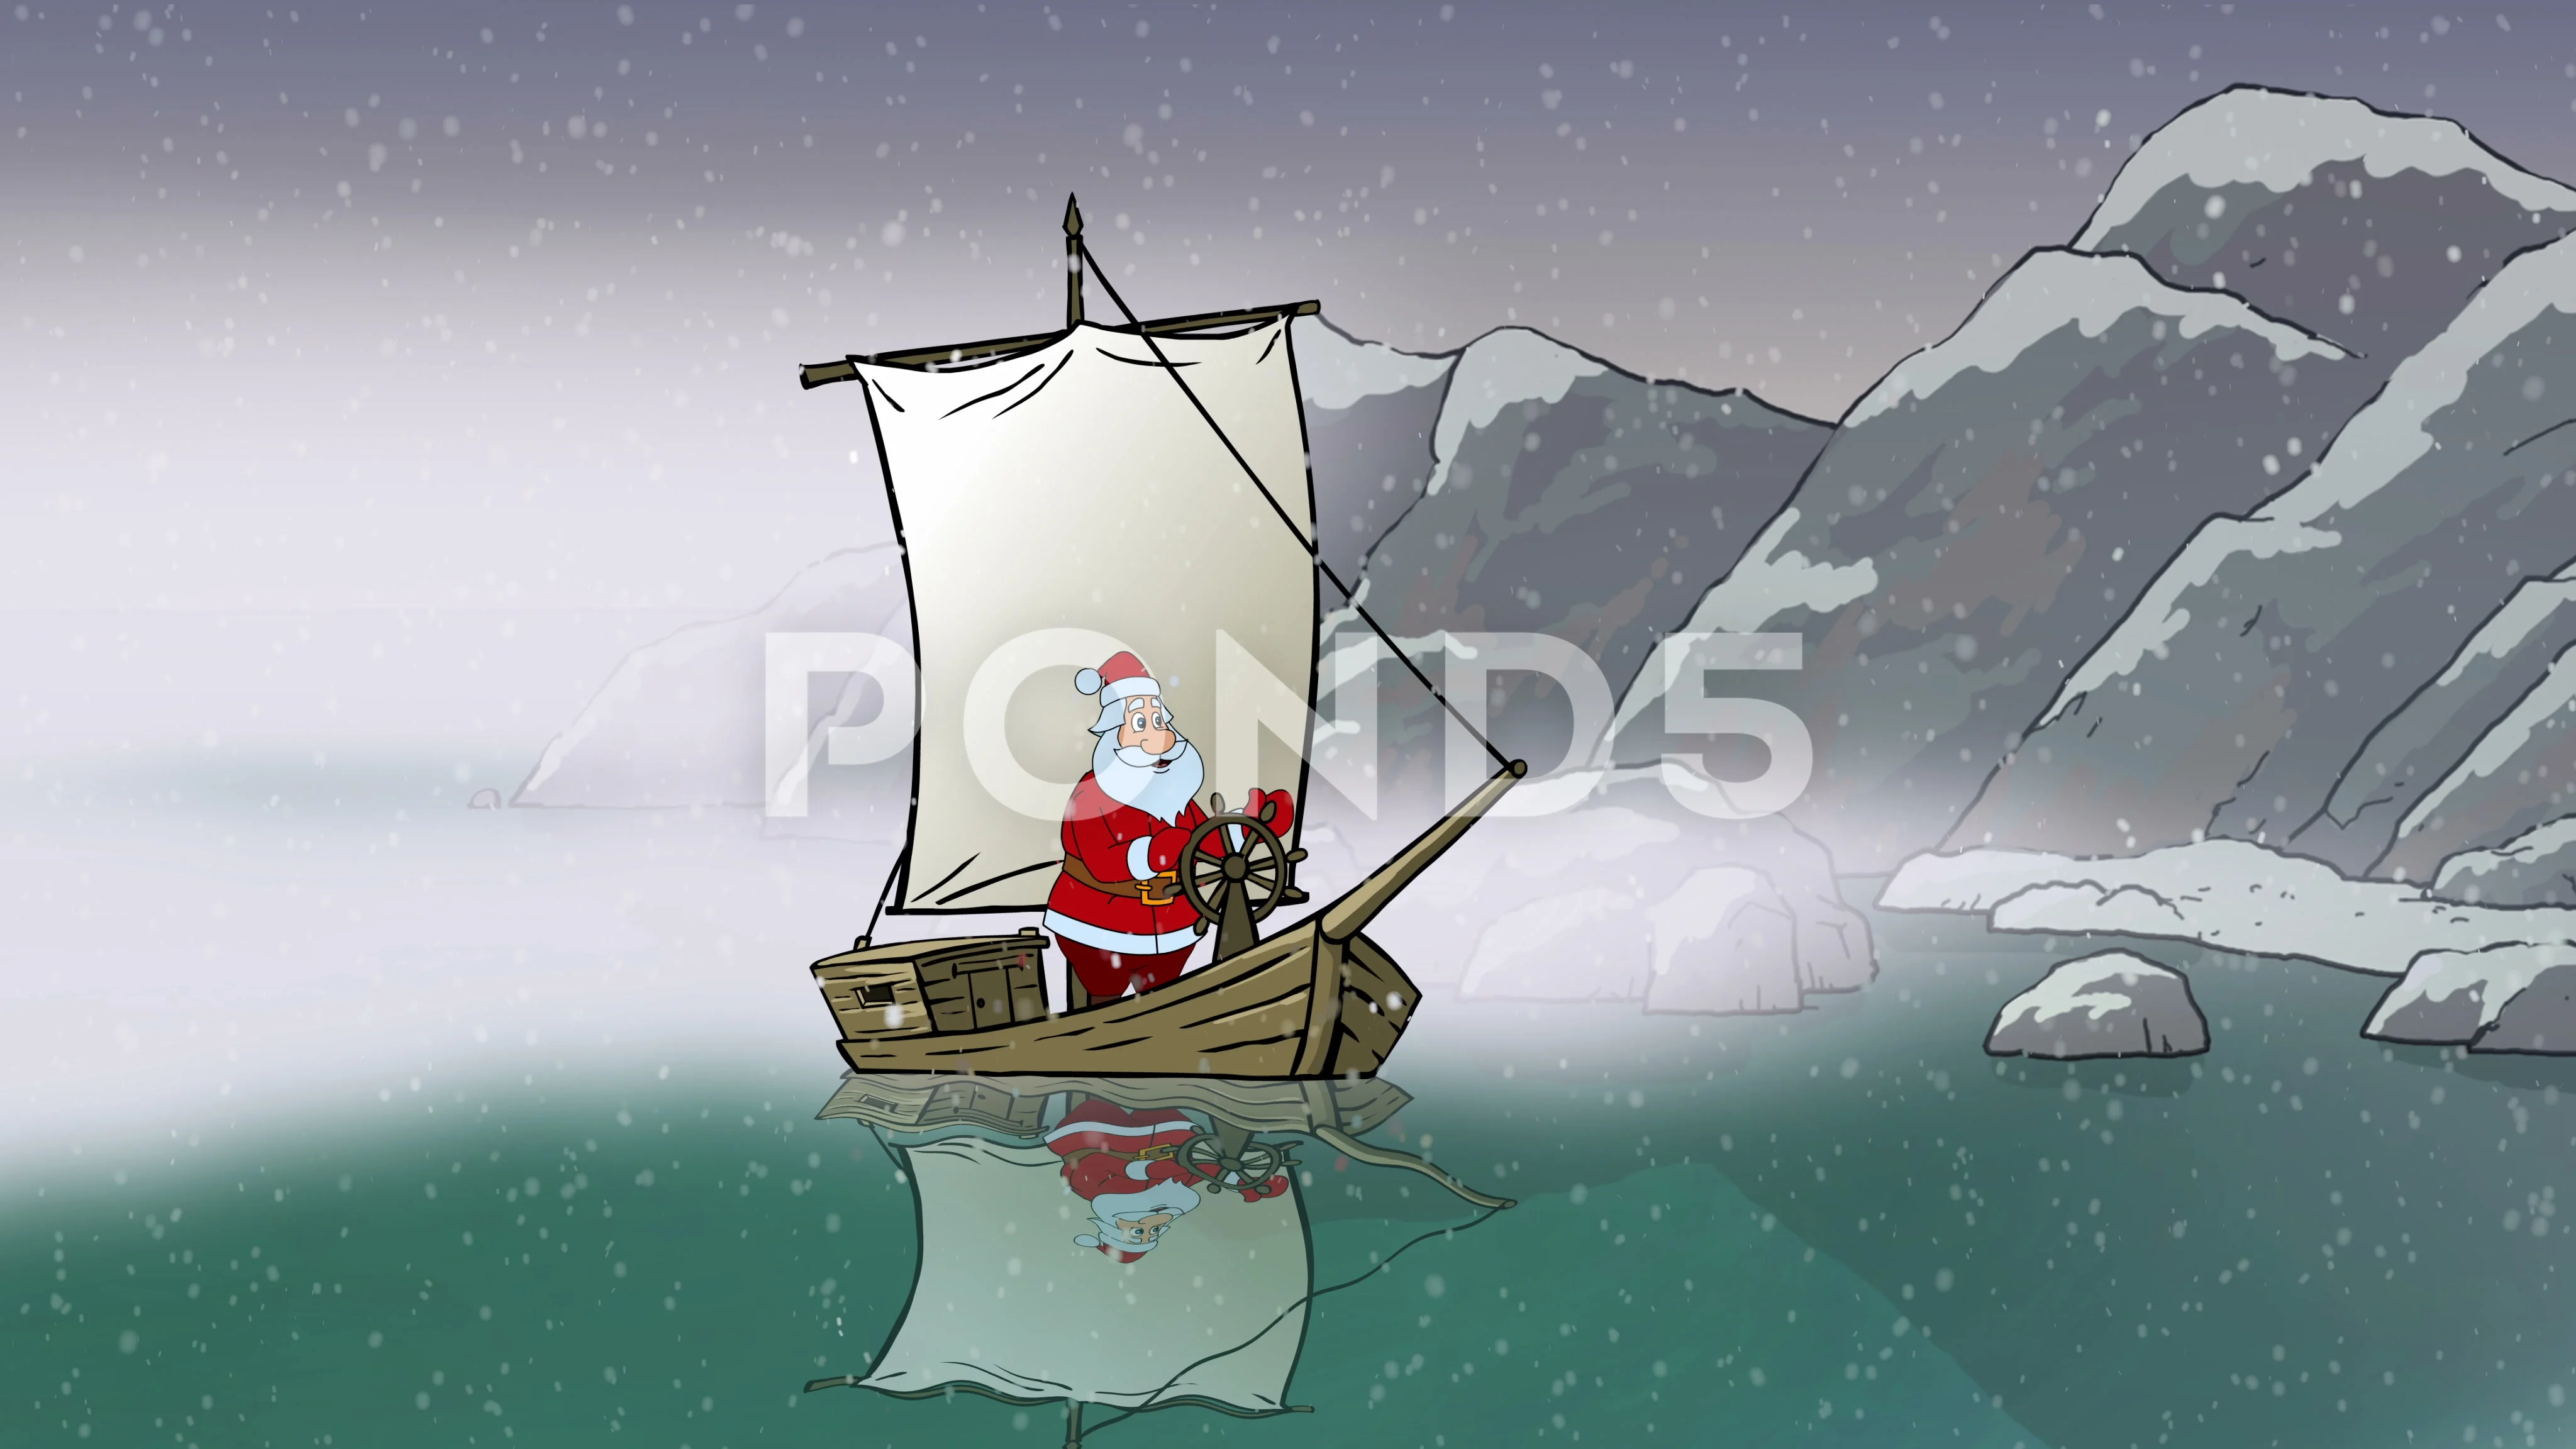 https://images.pond5.com/christmas-animated-card-santa-claus-081045673_prevstill.jpeg